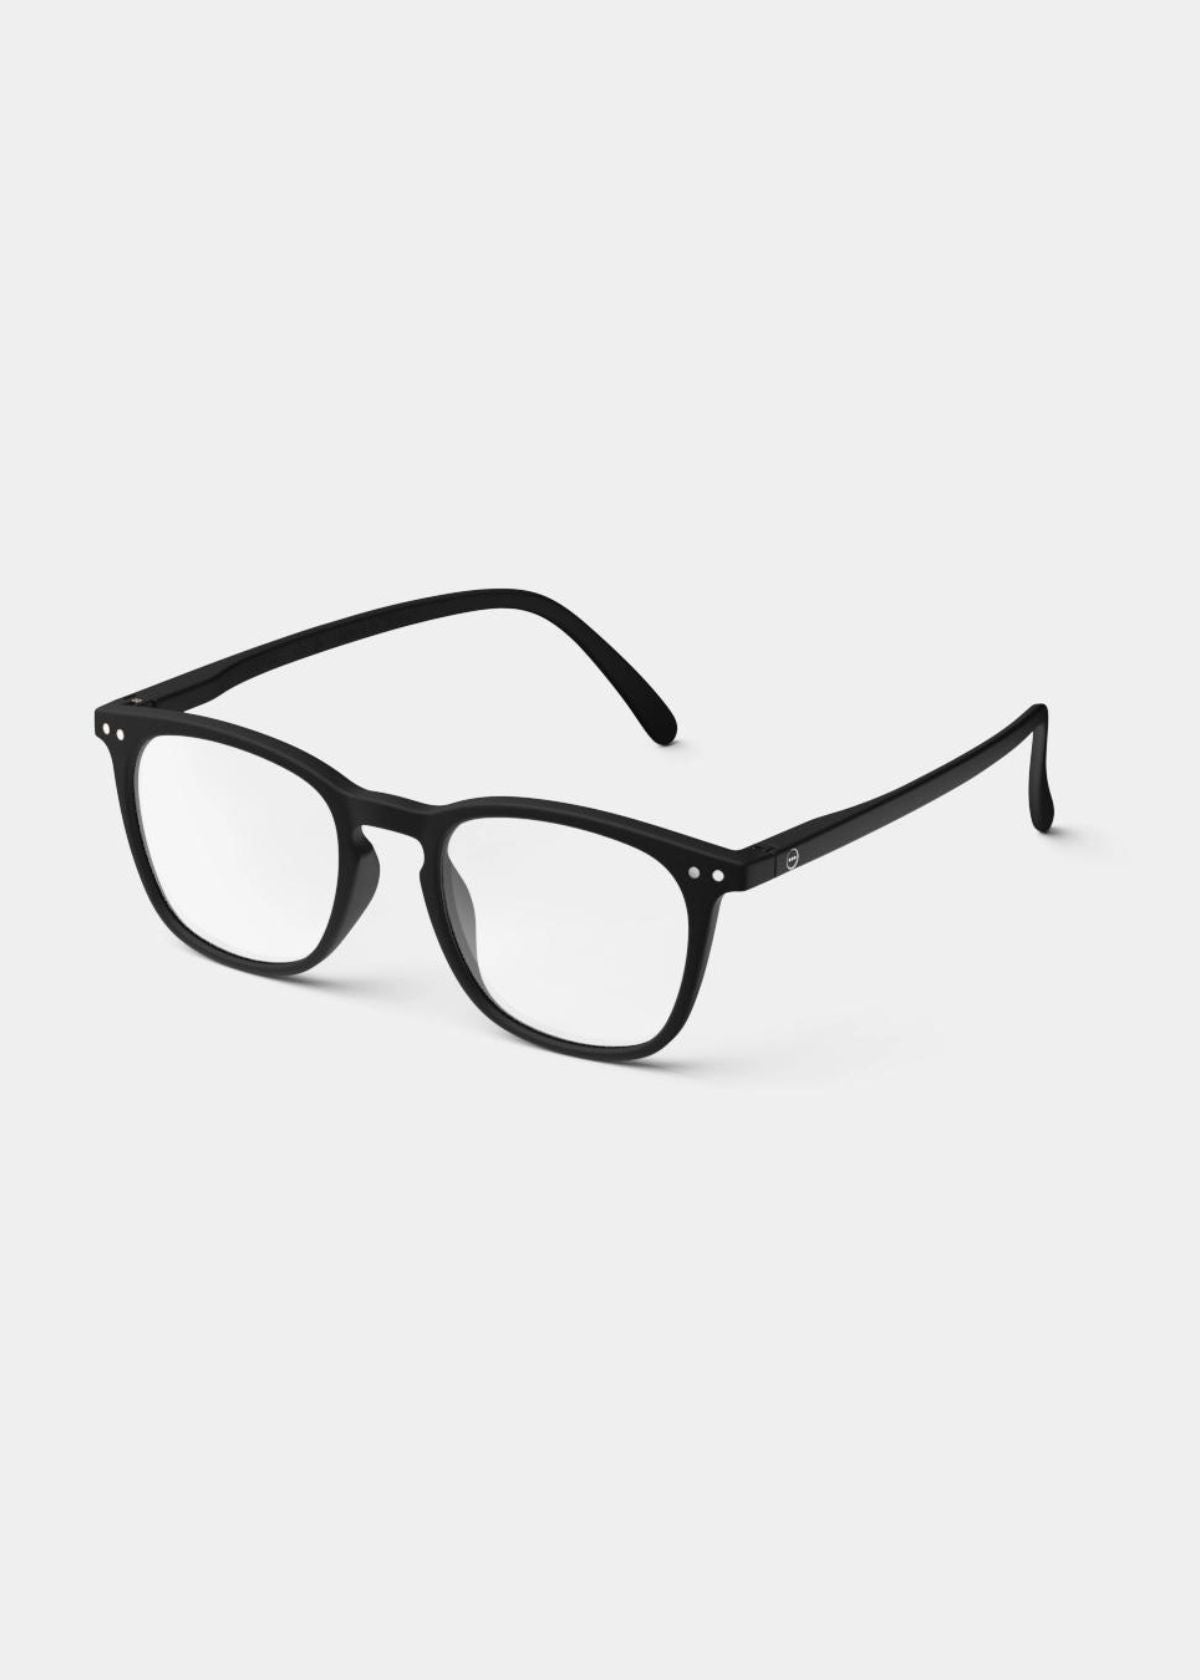 IZIPIZI Trapezium Shaped Reading Glasses #E in Black